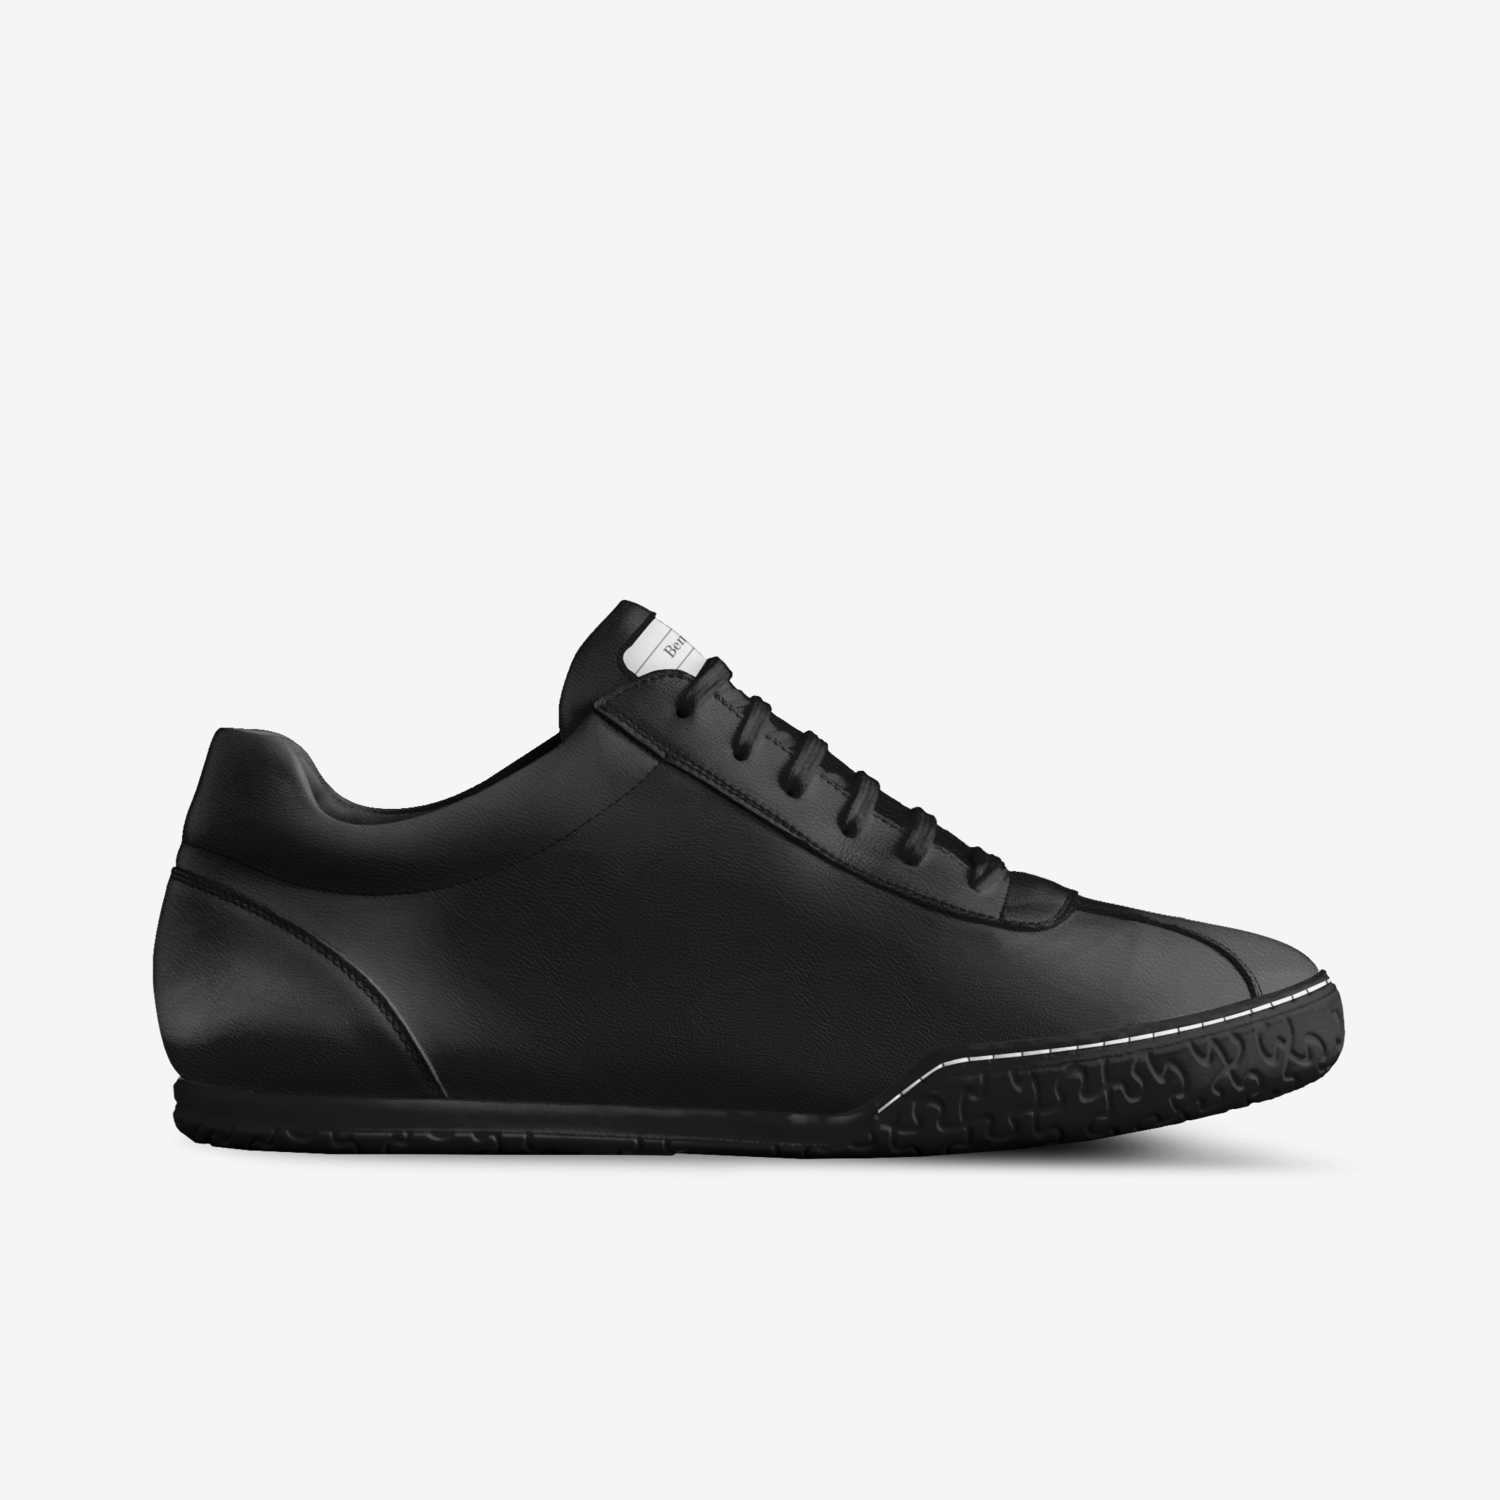 Bentons | A Custom Shoe concept by Myron Benton